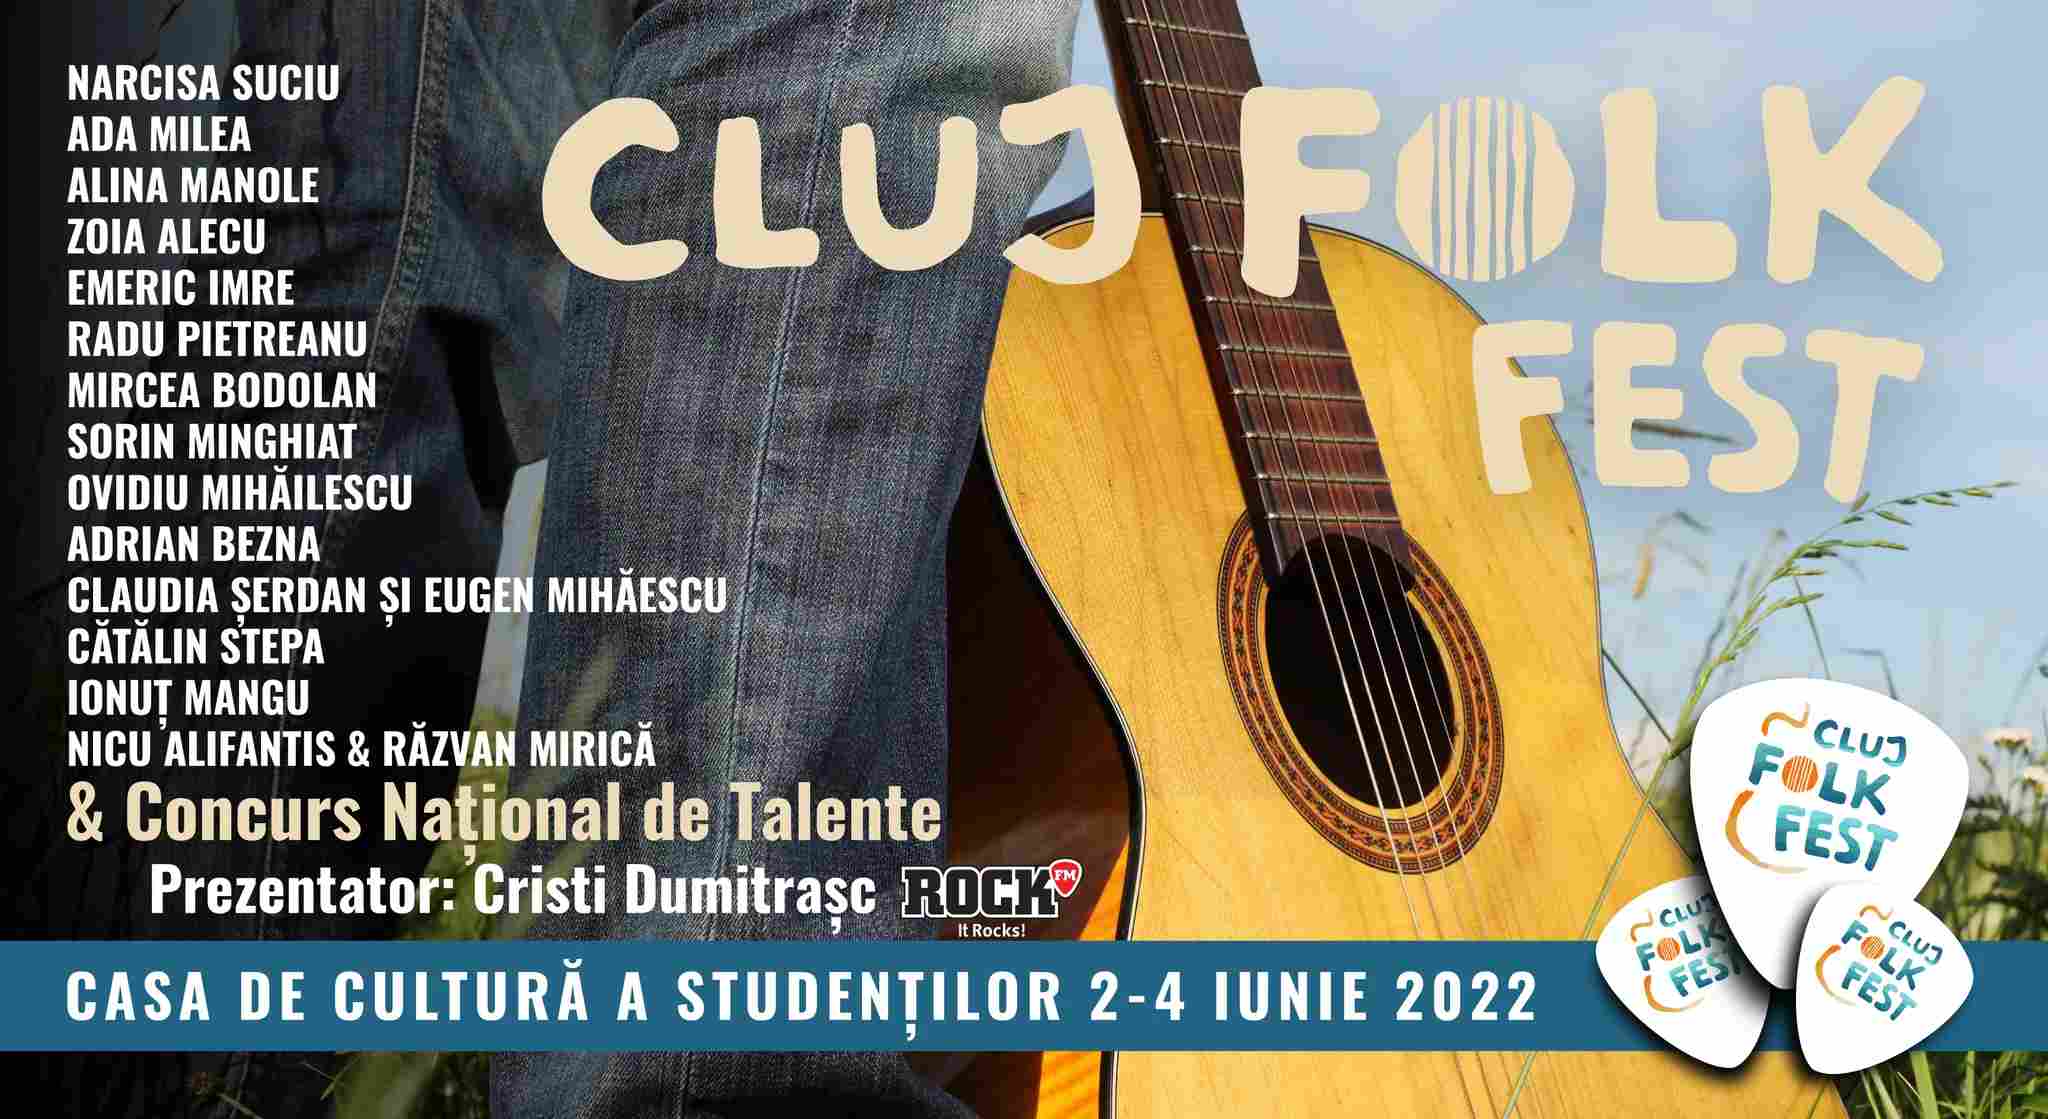 Narcisa Suciu, Ada Milea și Nicu Alifantis vin la Cluj Folk Fest 2022